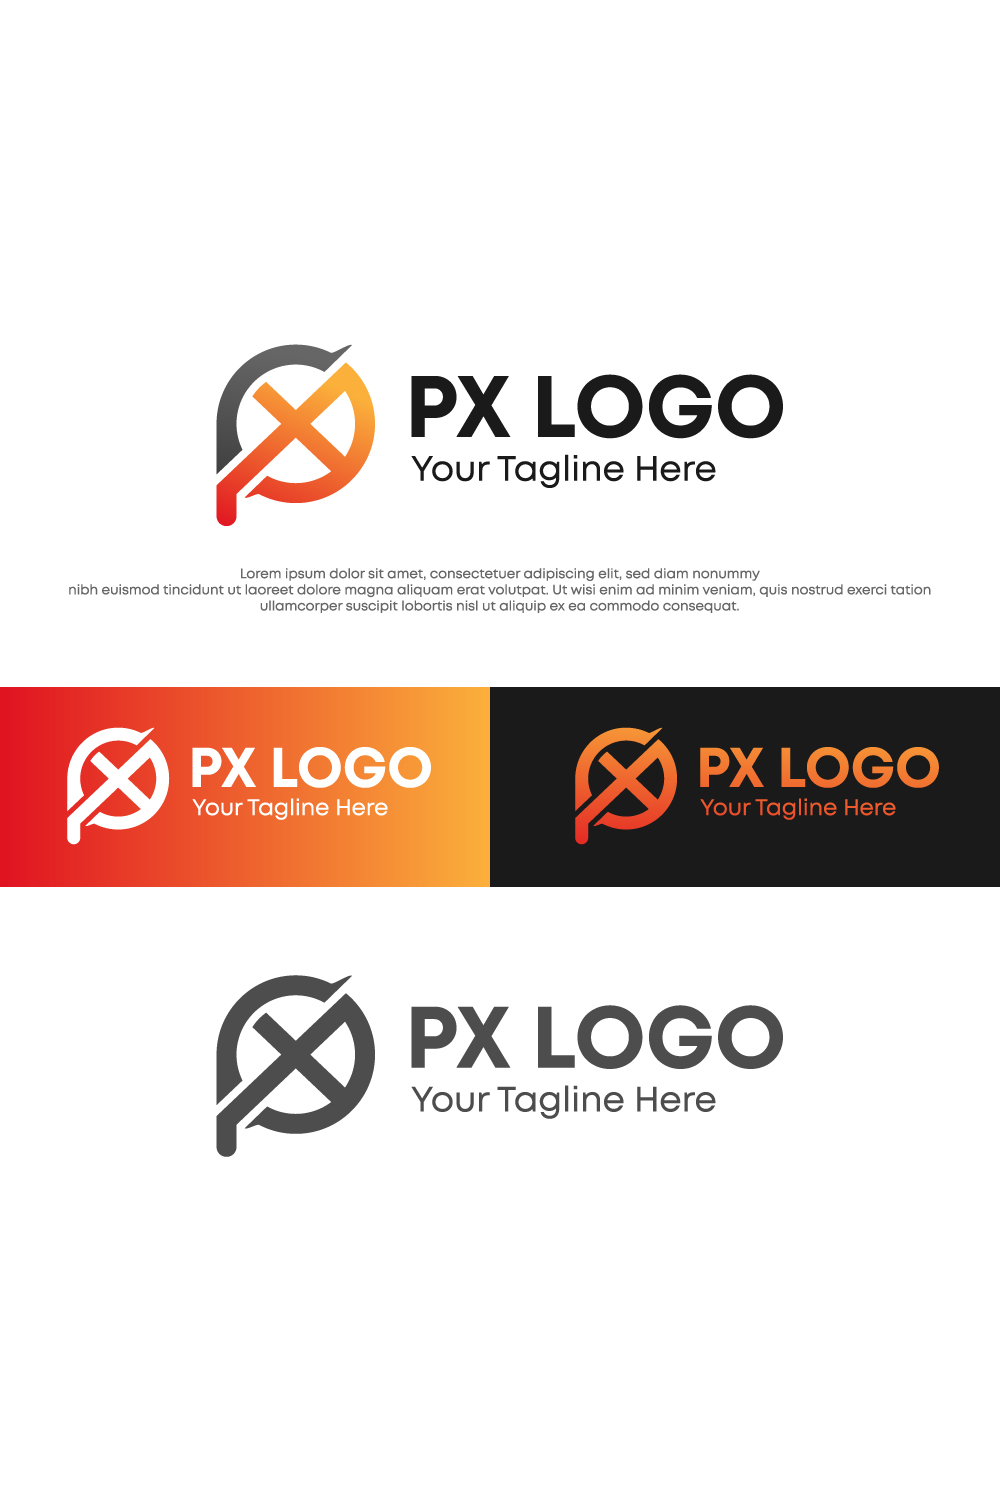 PX logo pinterest preview image.